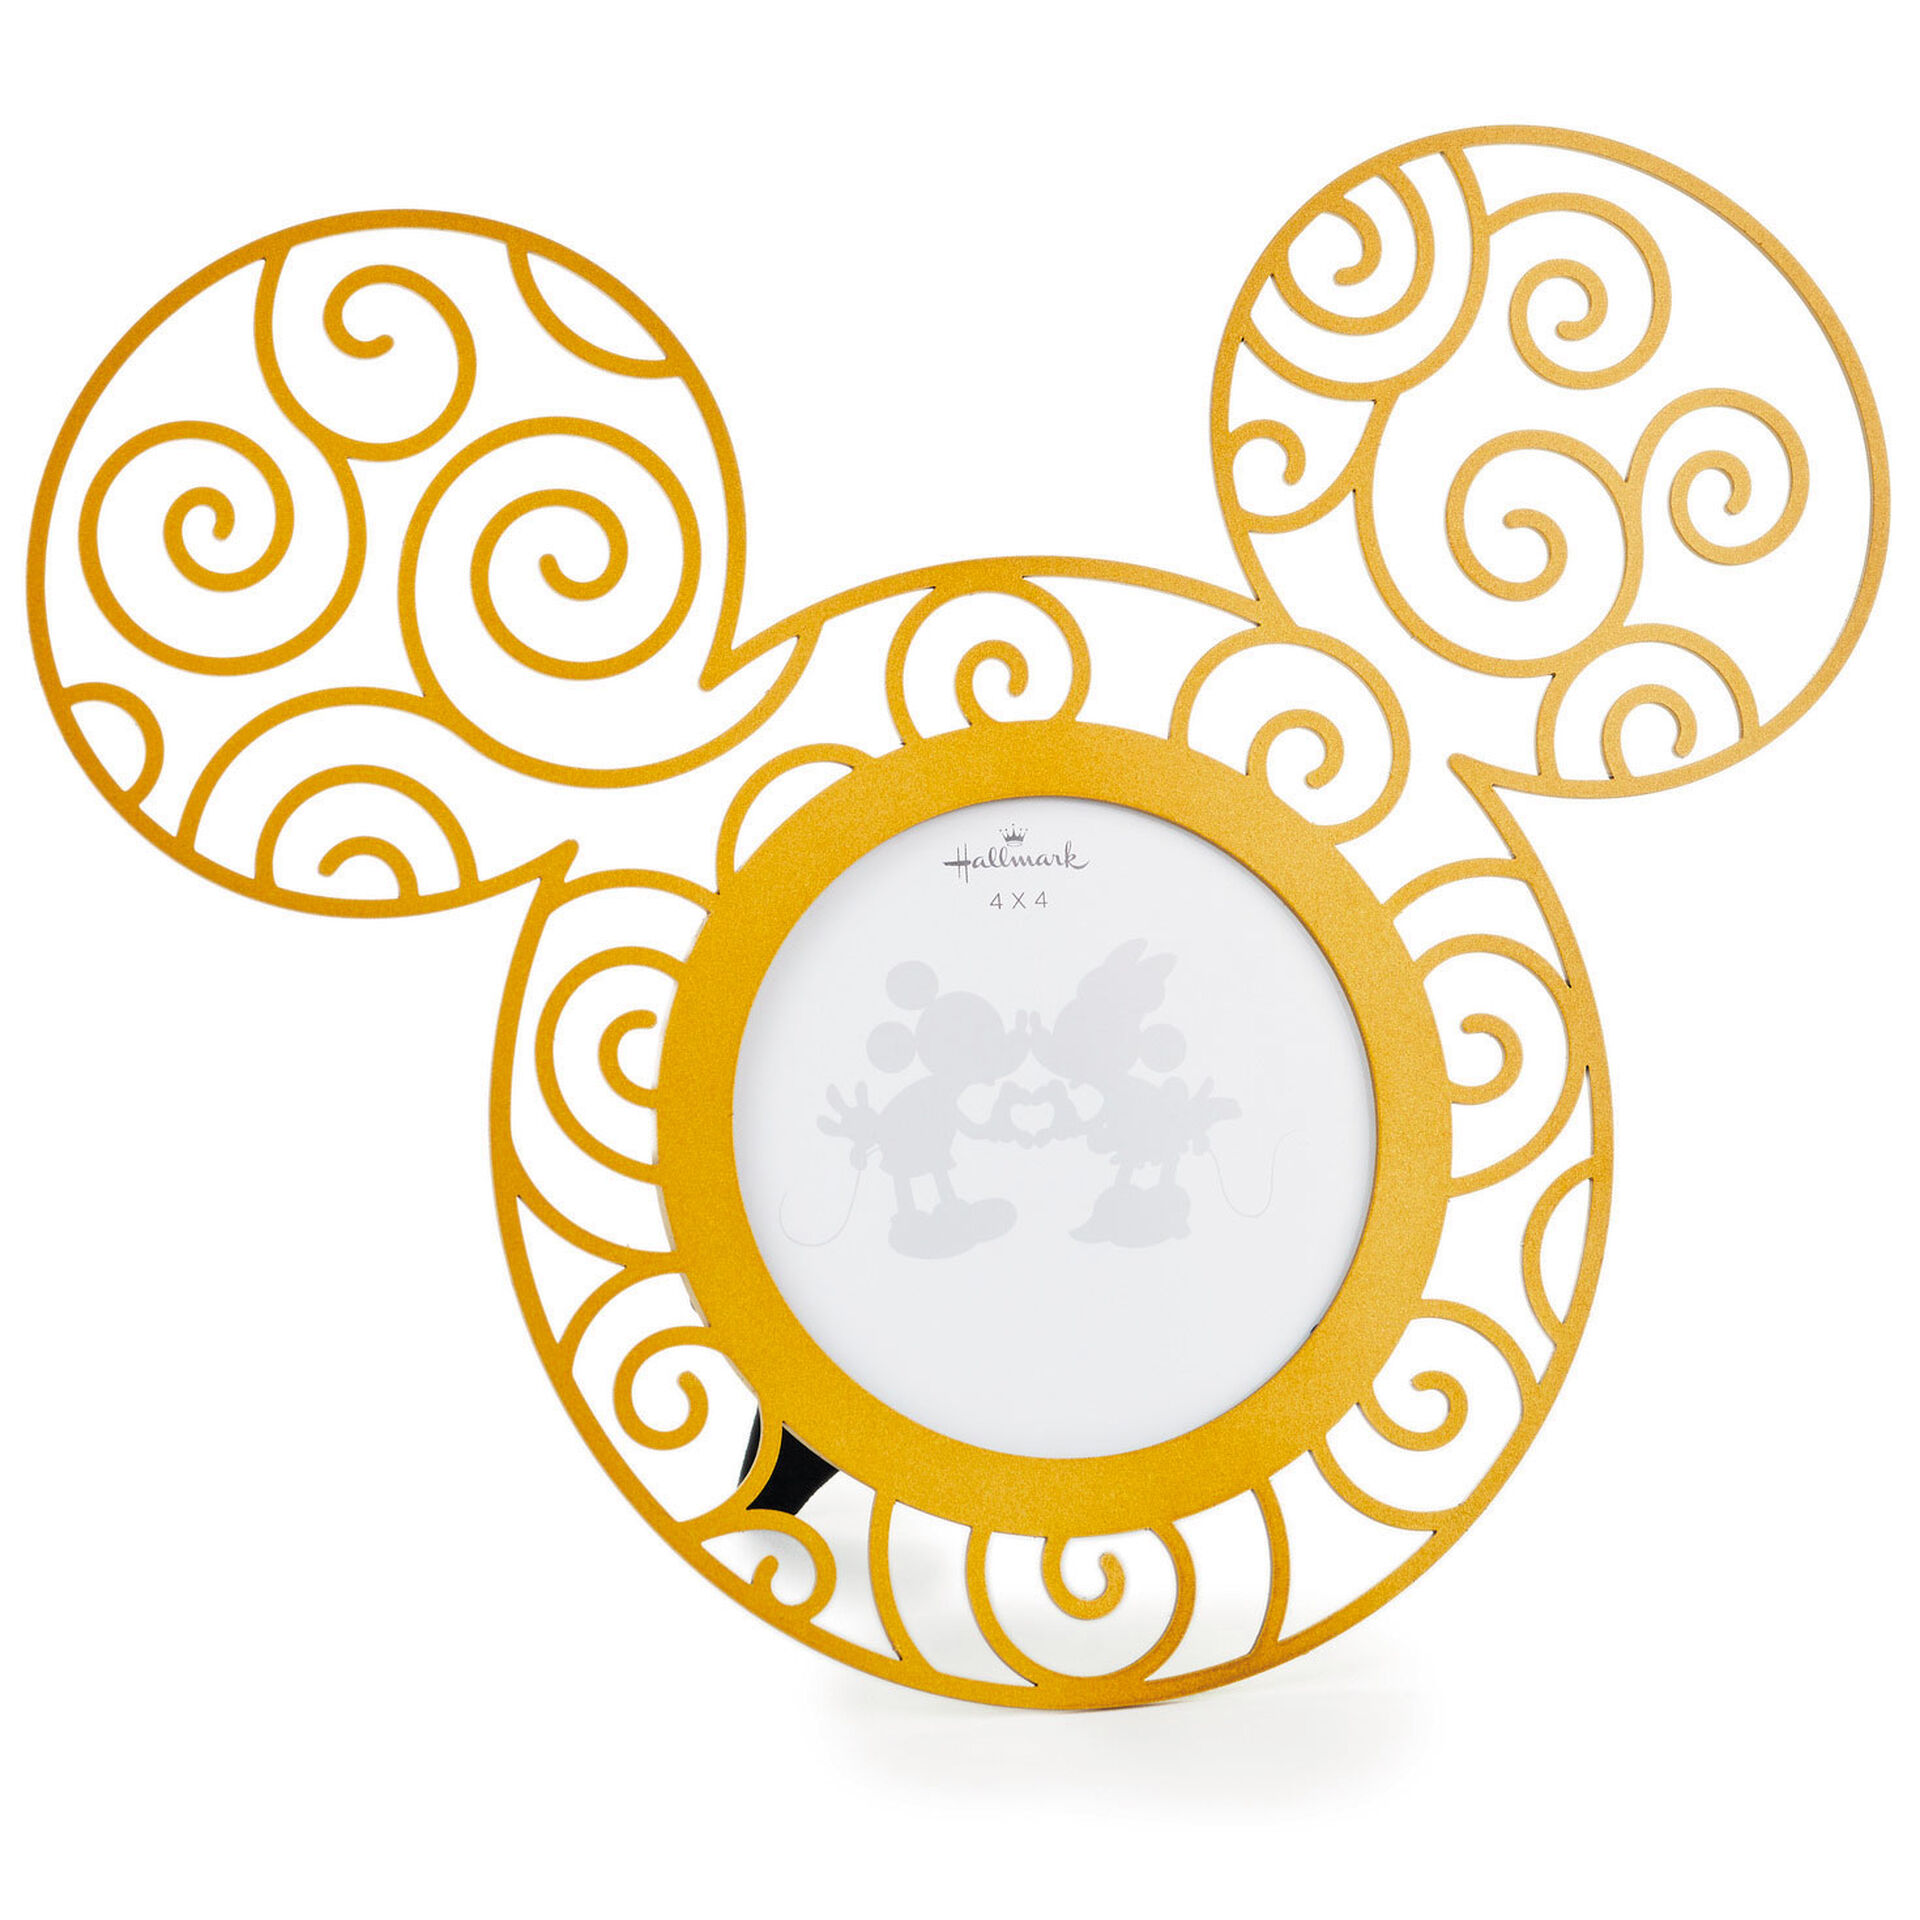 Disney-Mickey-Mouse-Ears-Metal-Picture-Frame_1DYG2050_01.jpg